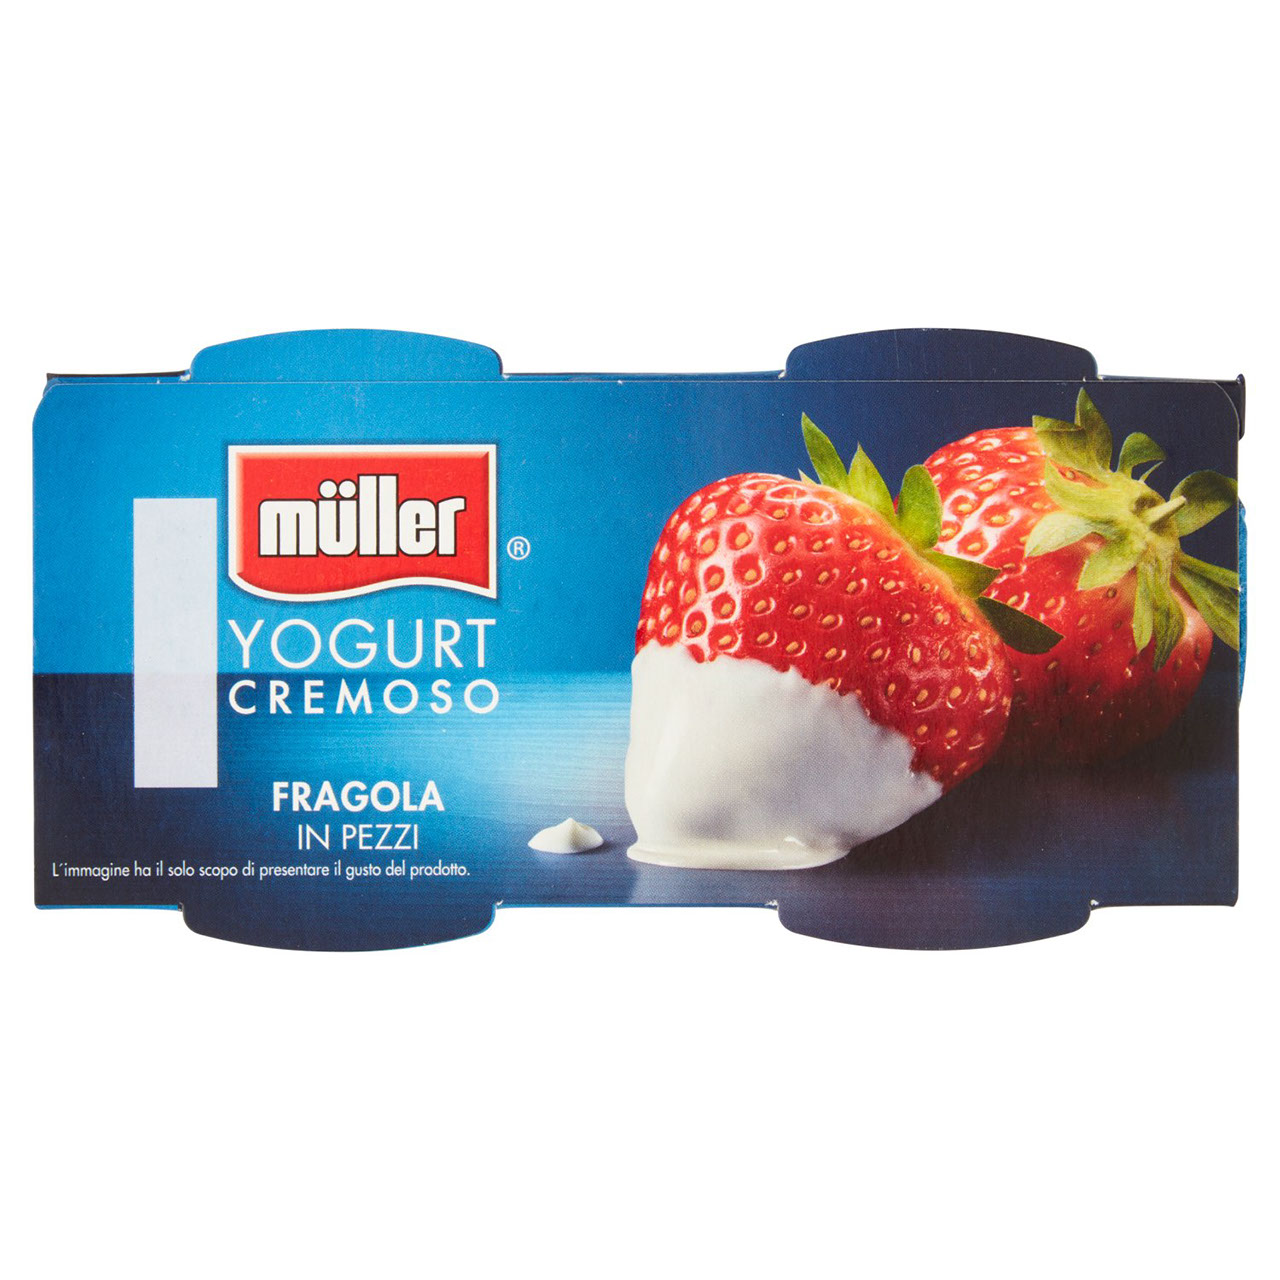 Müller Yogurt Cremoso Fragola in Pezzi 2x125g